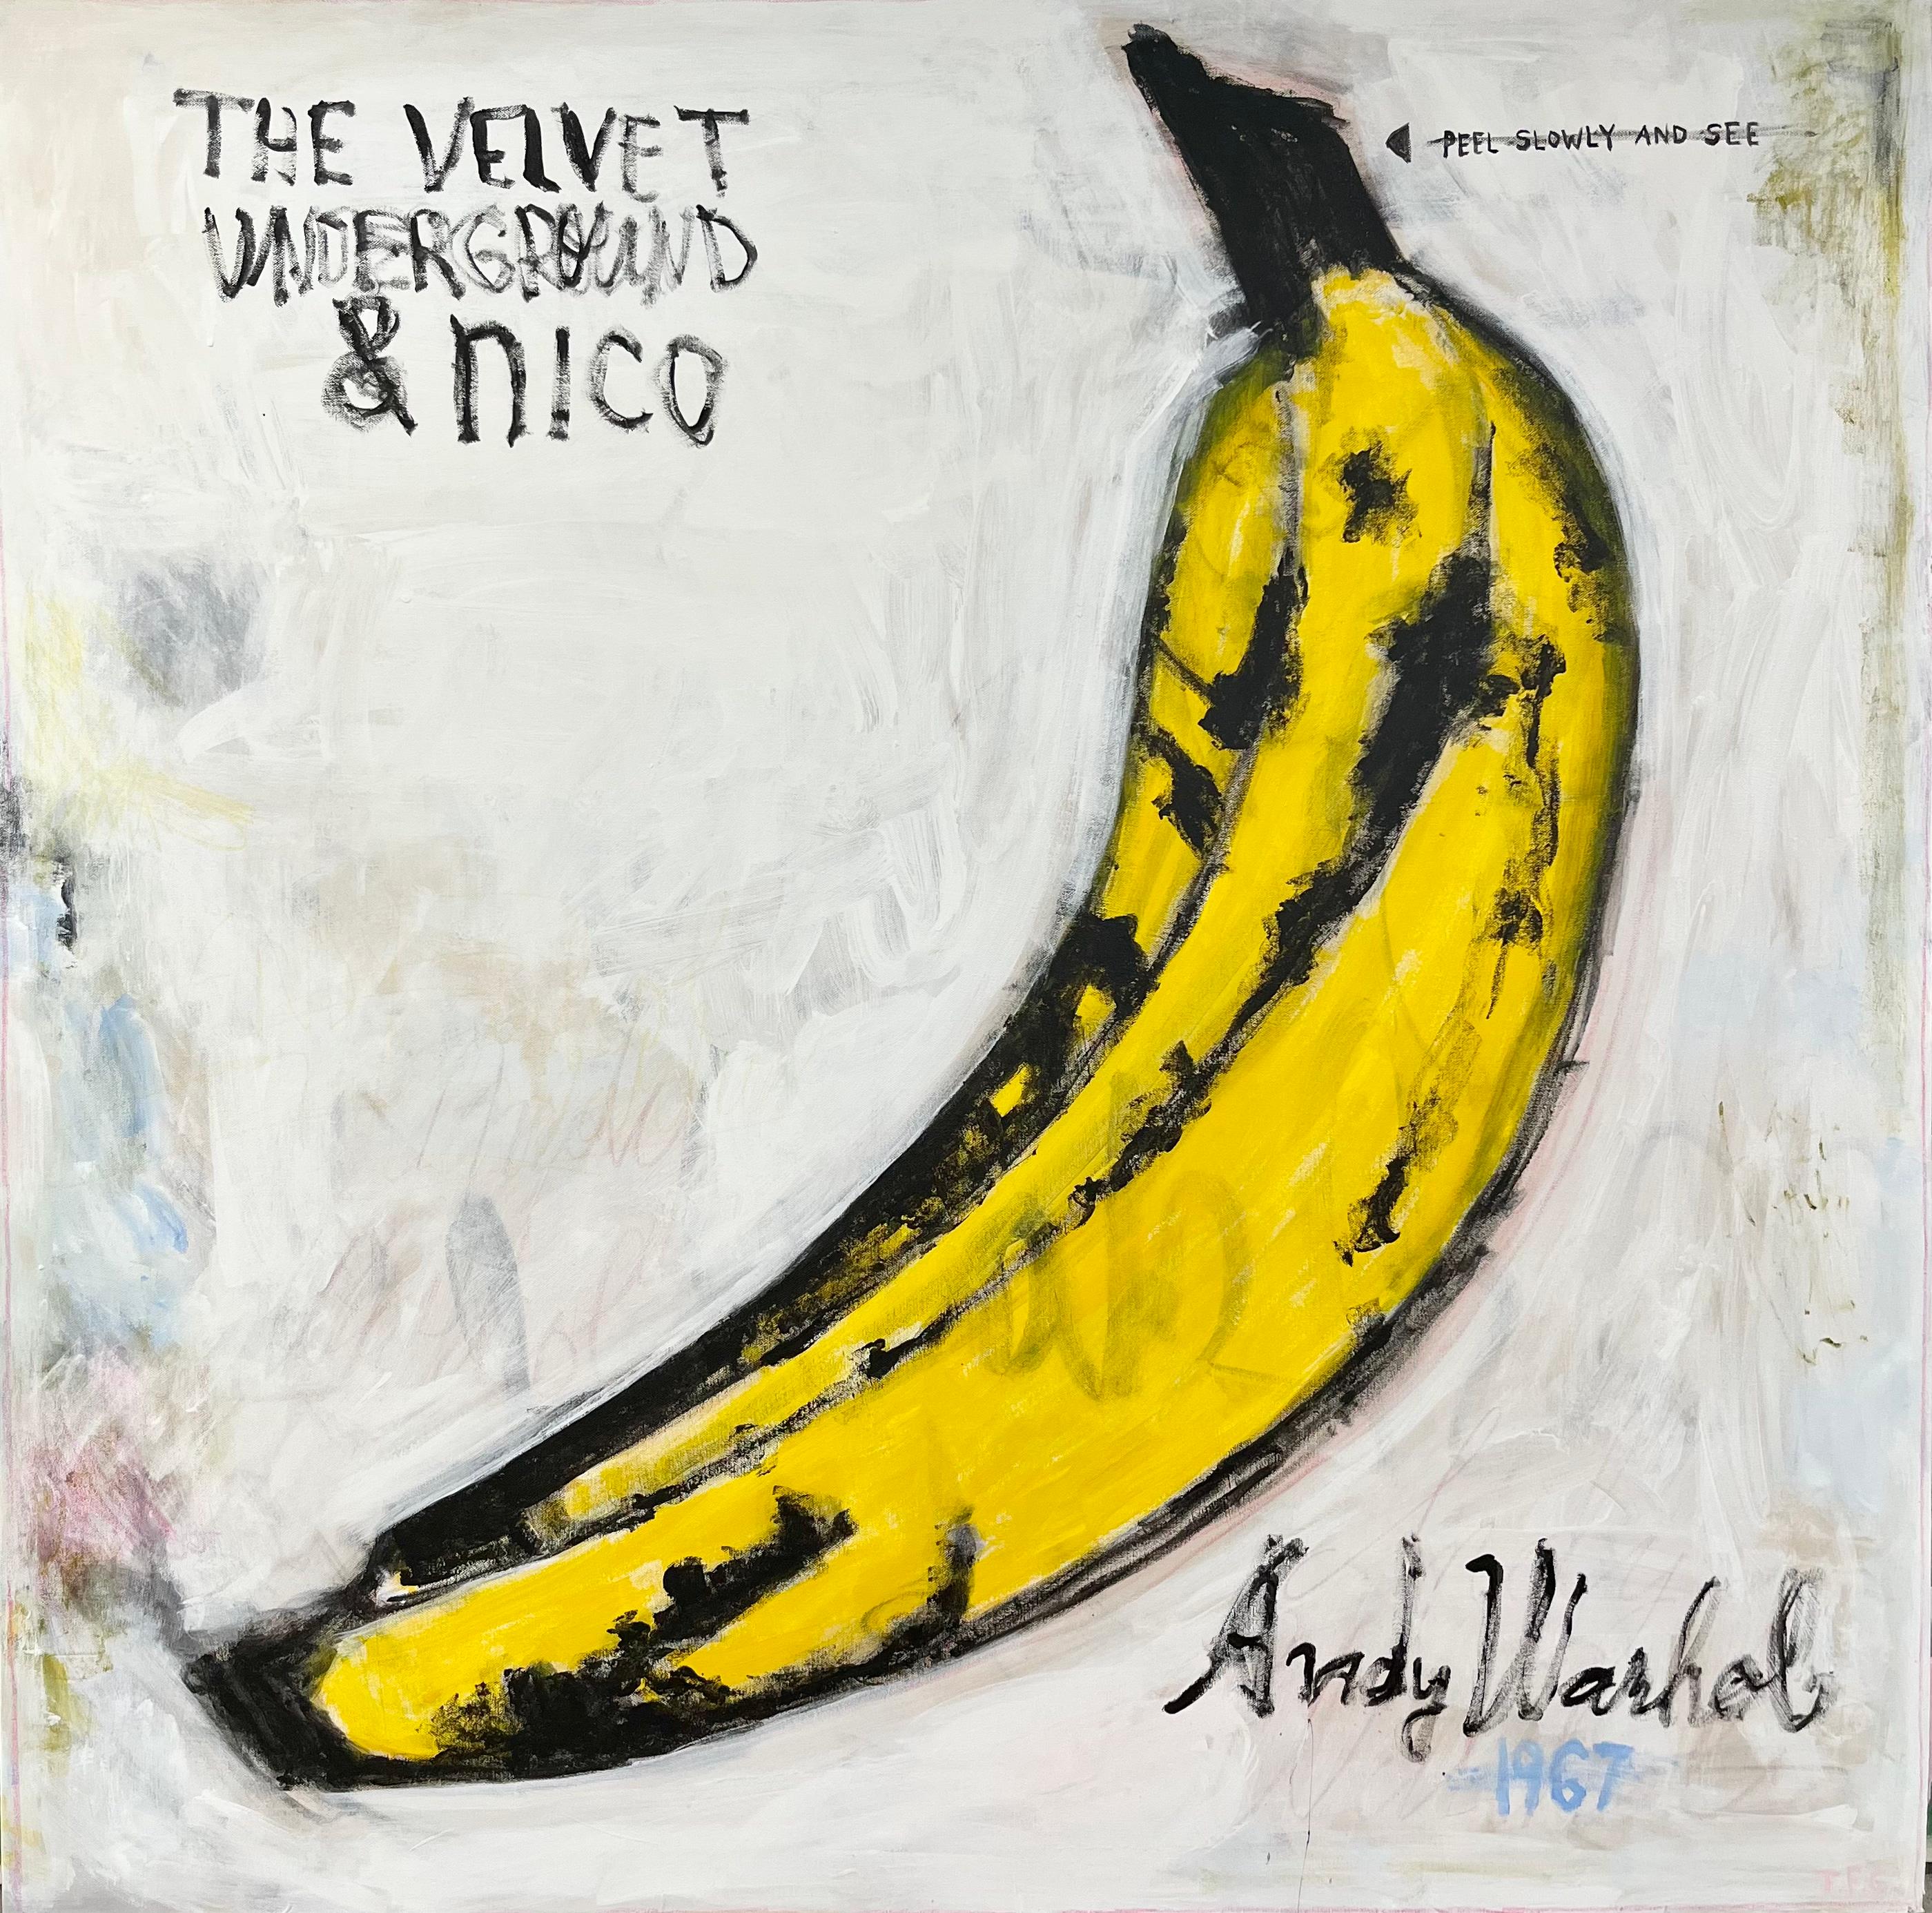 "Banana Album" Abstract Pop Art Andy Warhol Inspired Velvet Underground Painting